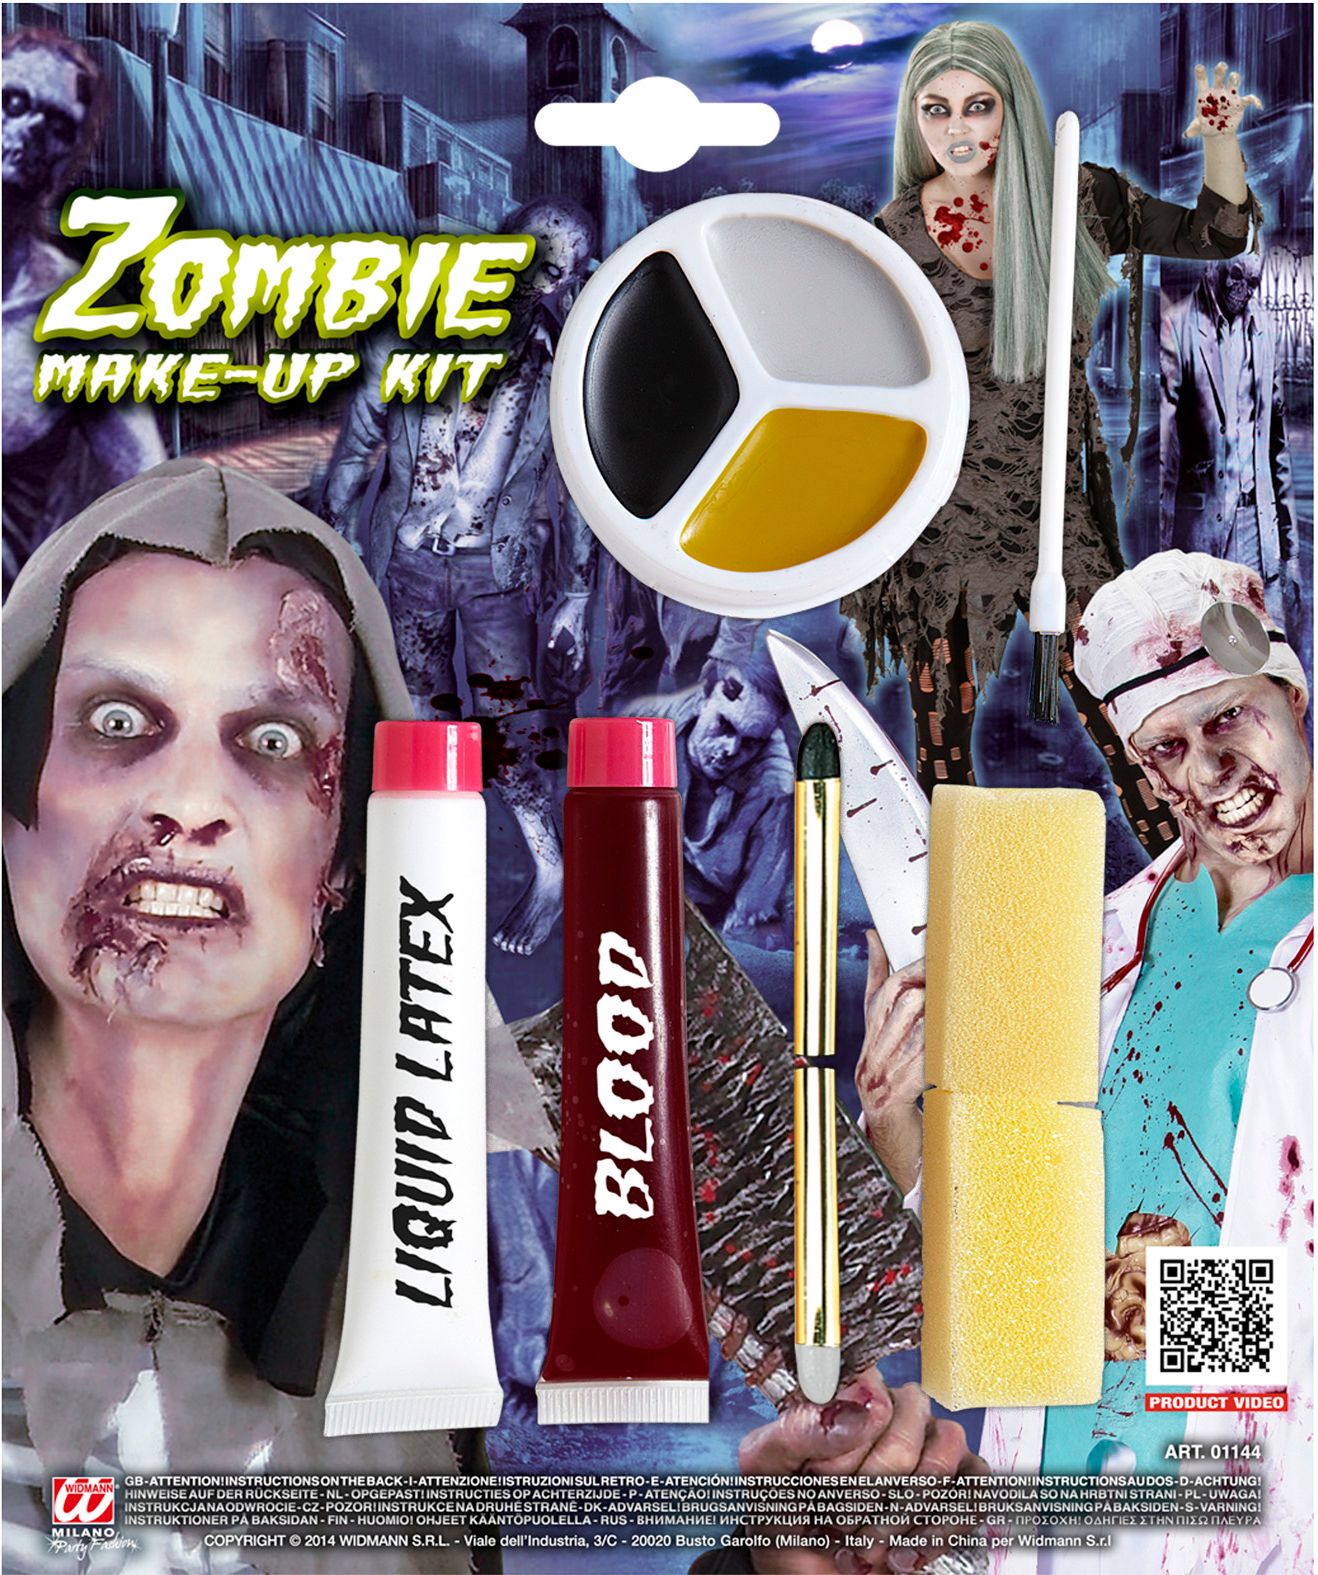 Zombie make-up kit